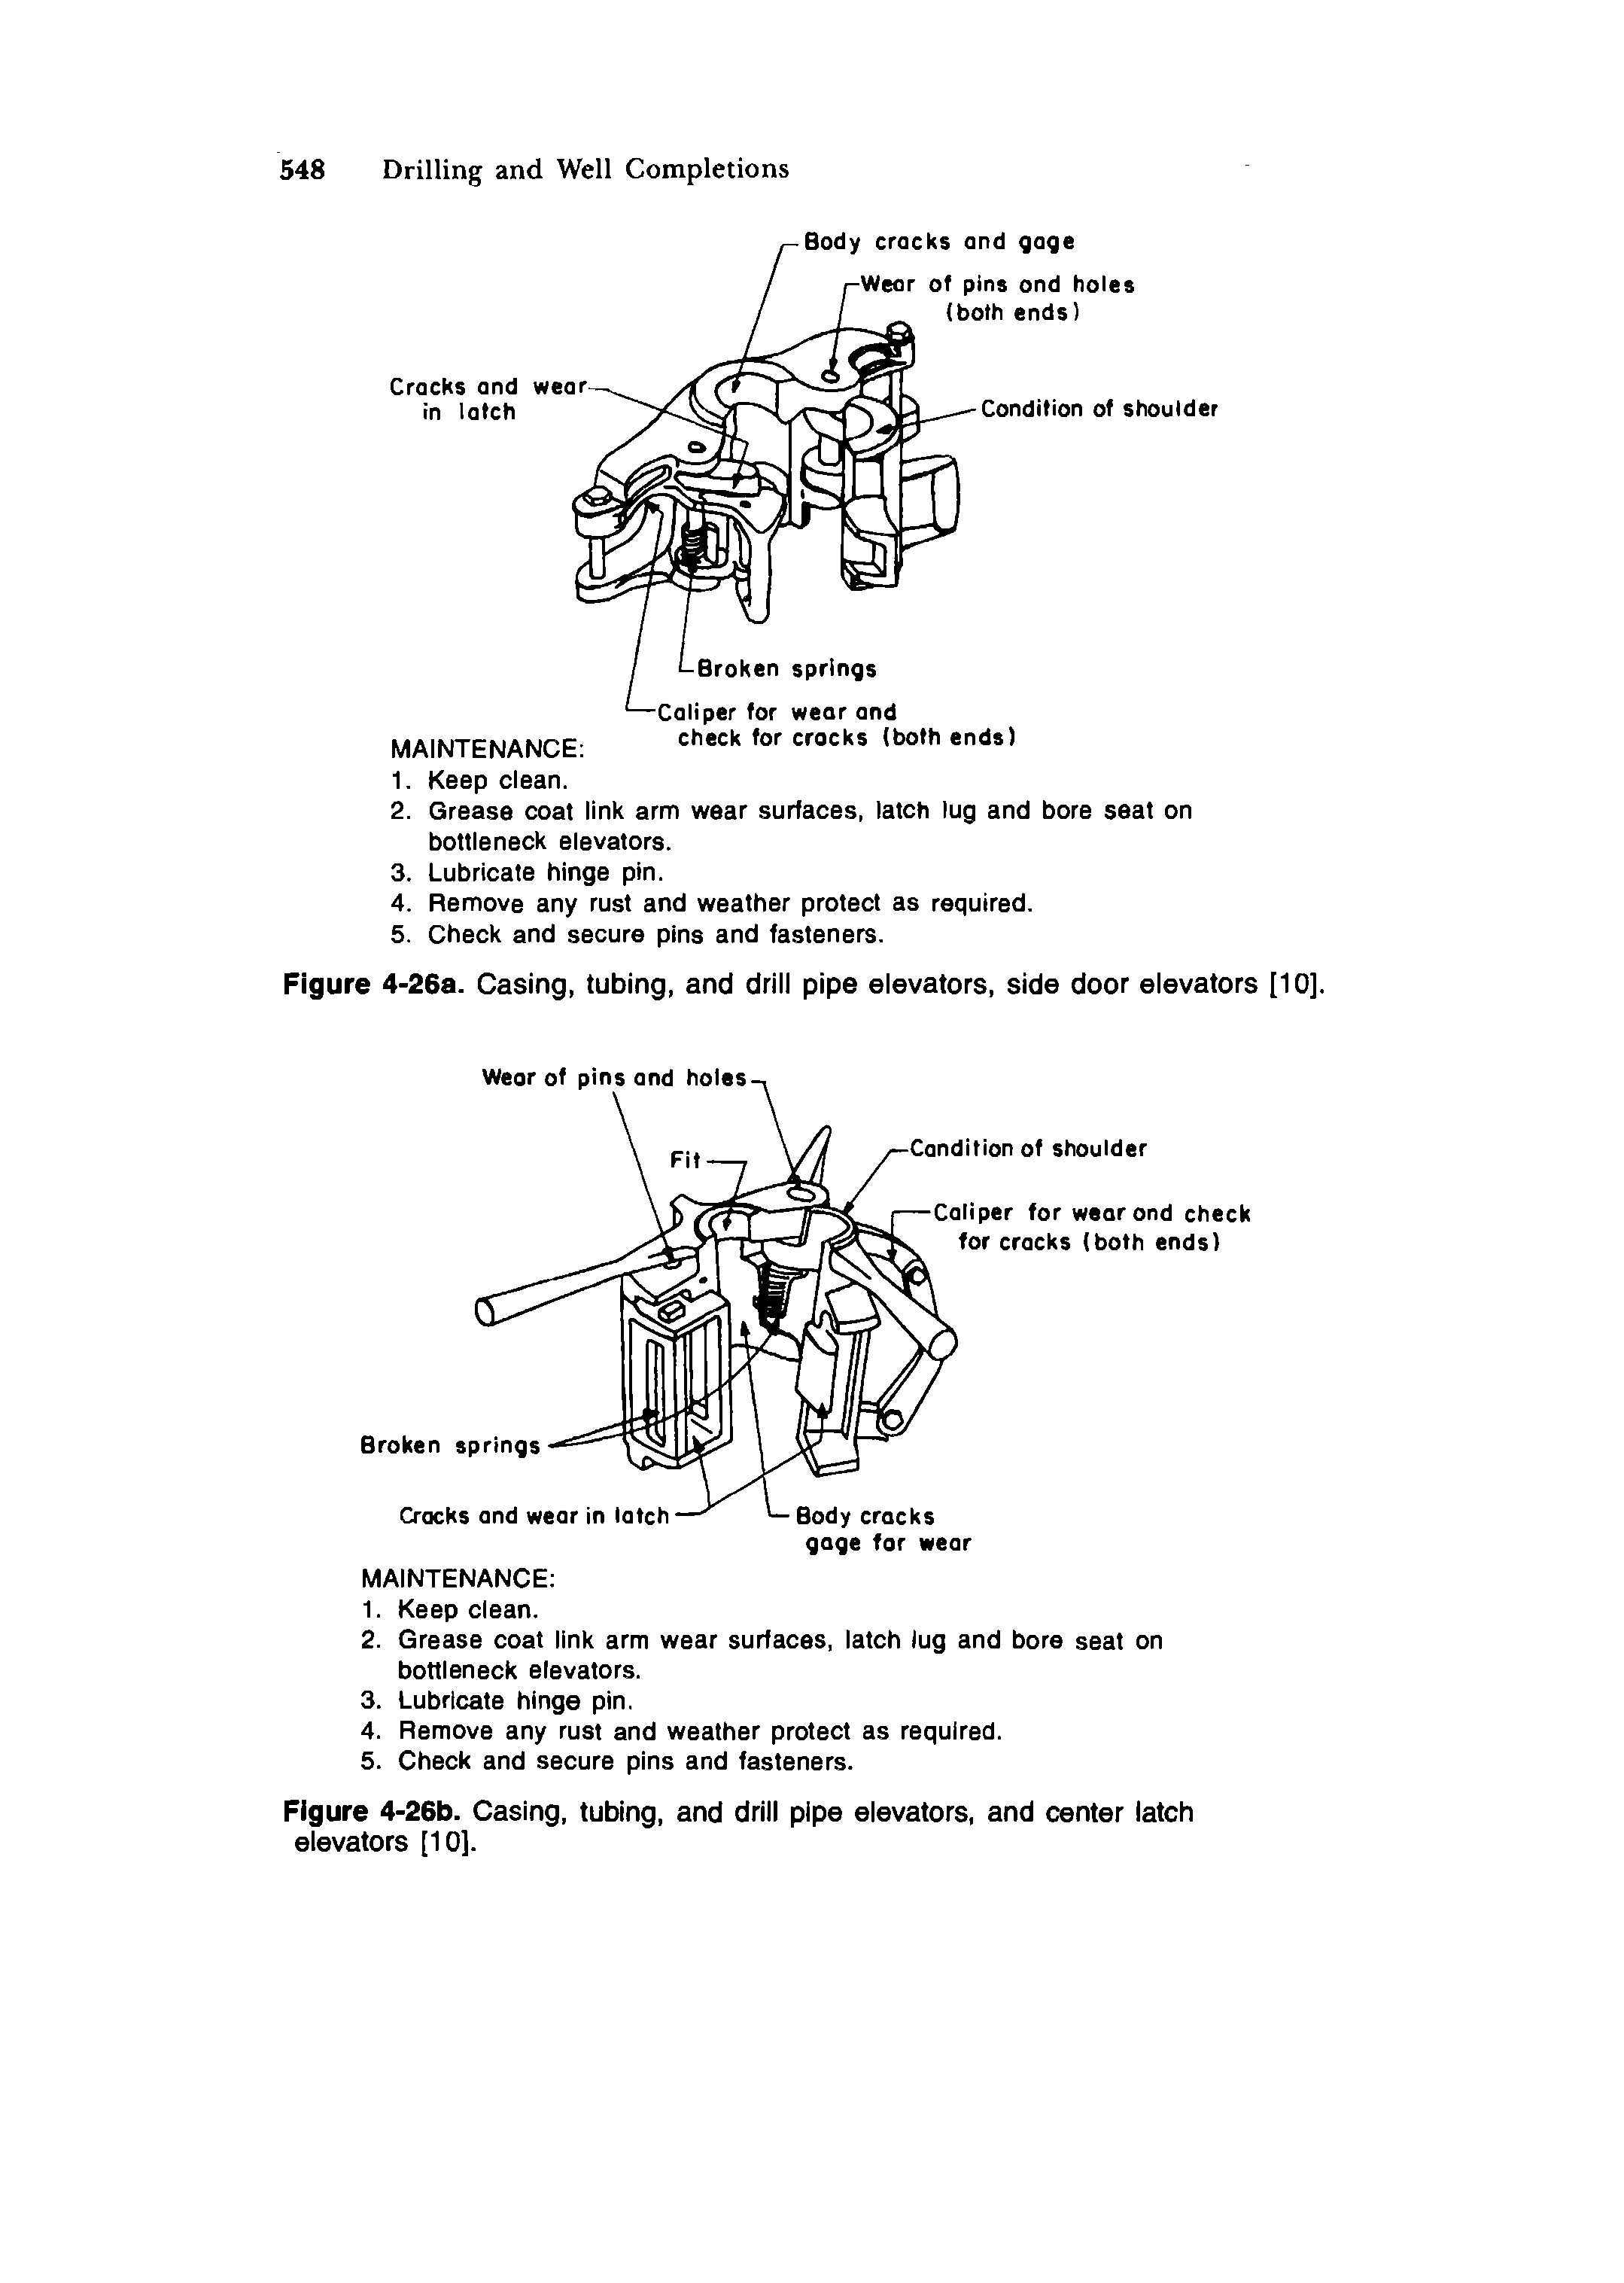 Figure 4-26a. Casing, tubing, and drill pipe elevators, side door elevators [10].